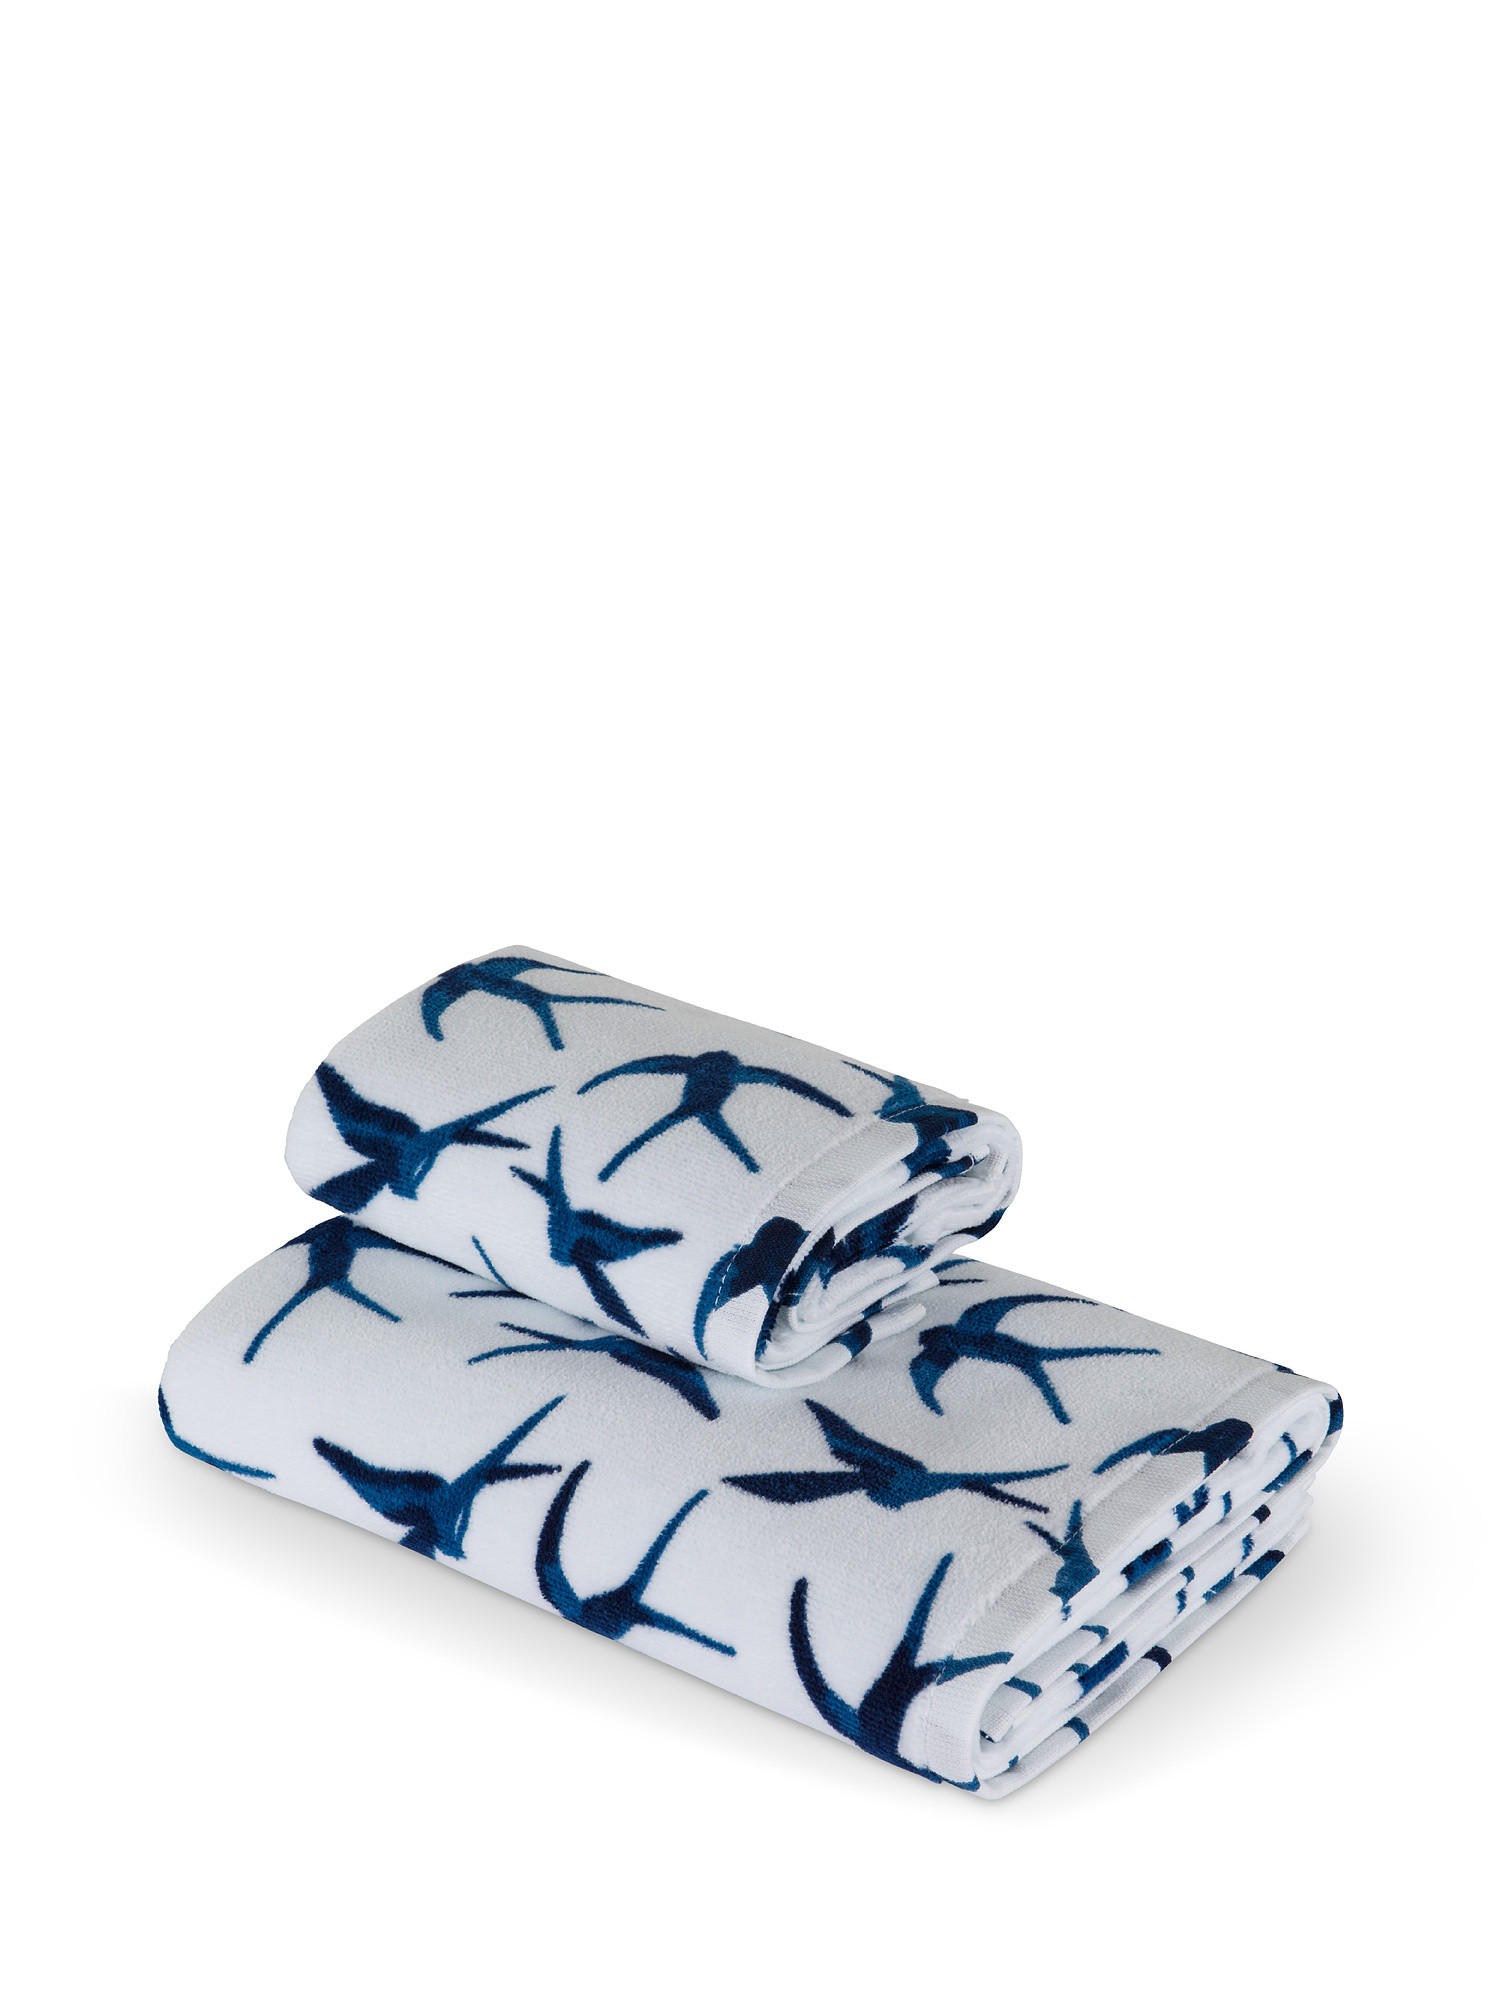 Asciugamano cotone velour motivo rondini, Bianco, large